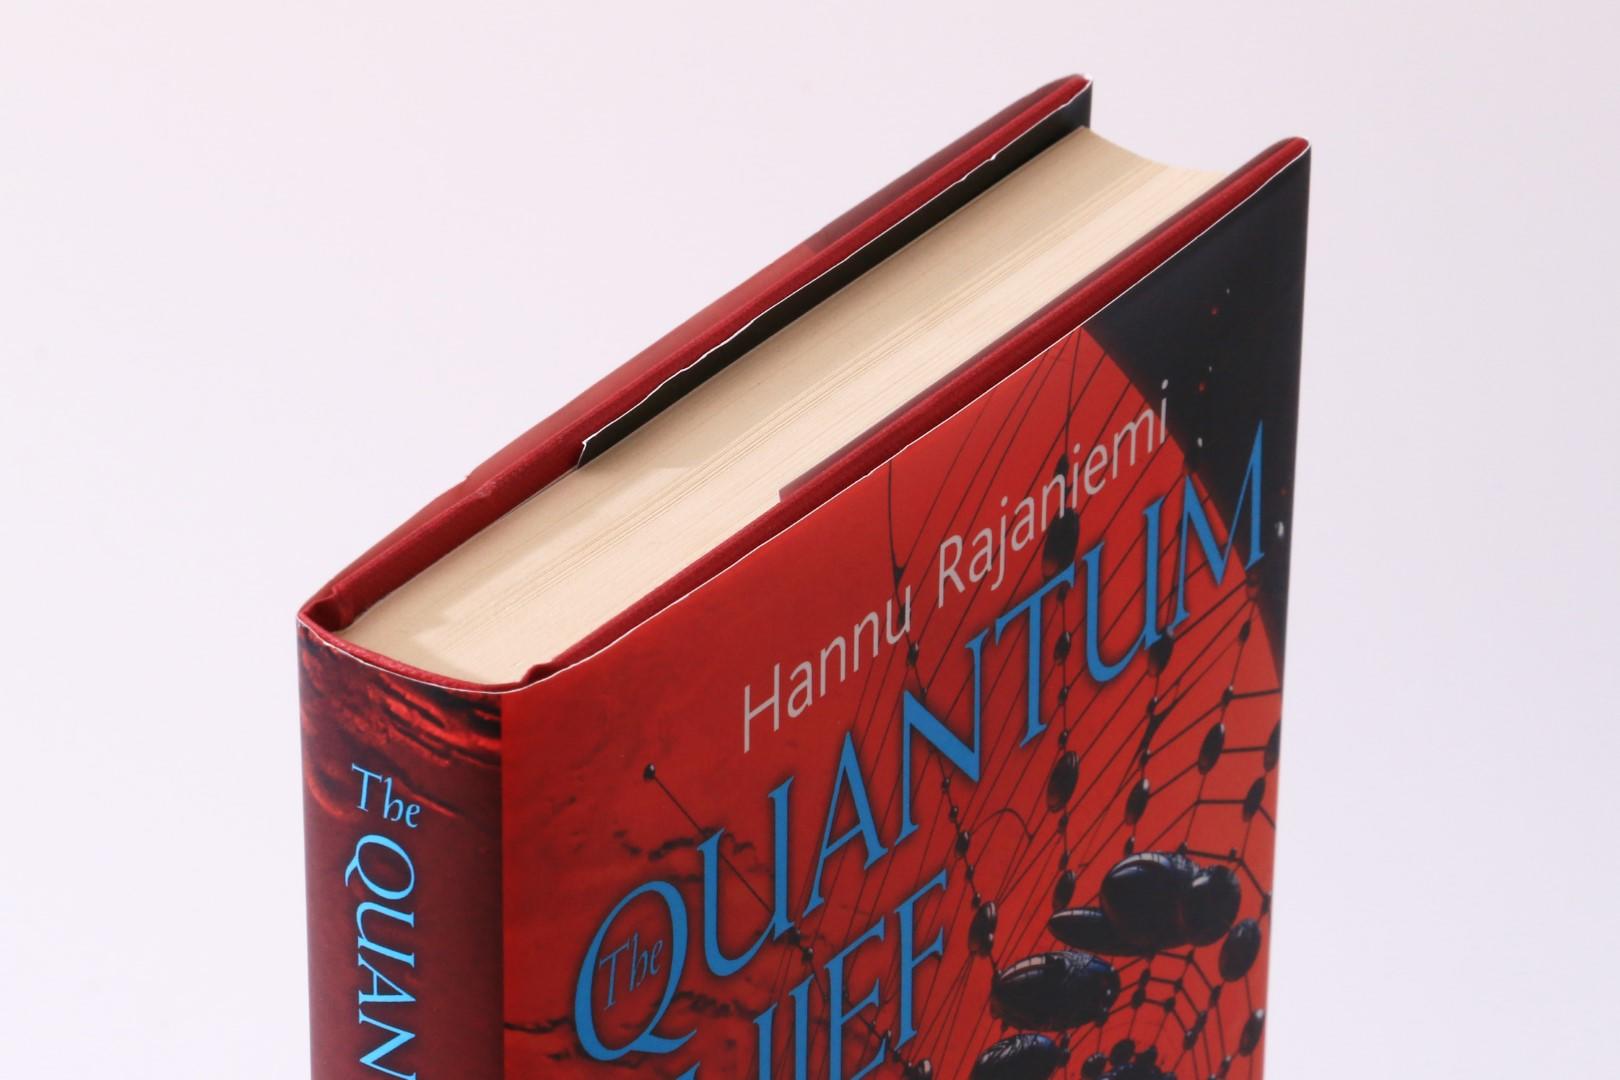 Hannu Rajaniemi - The Quantum Thief - Gollancz, 2010, First Edition.